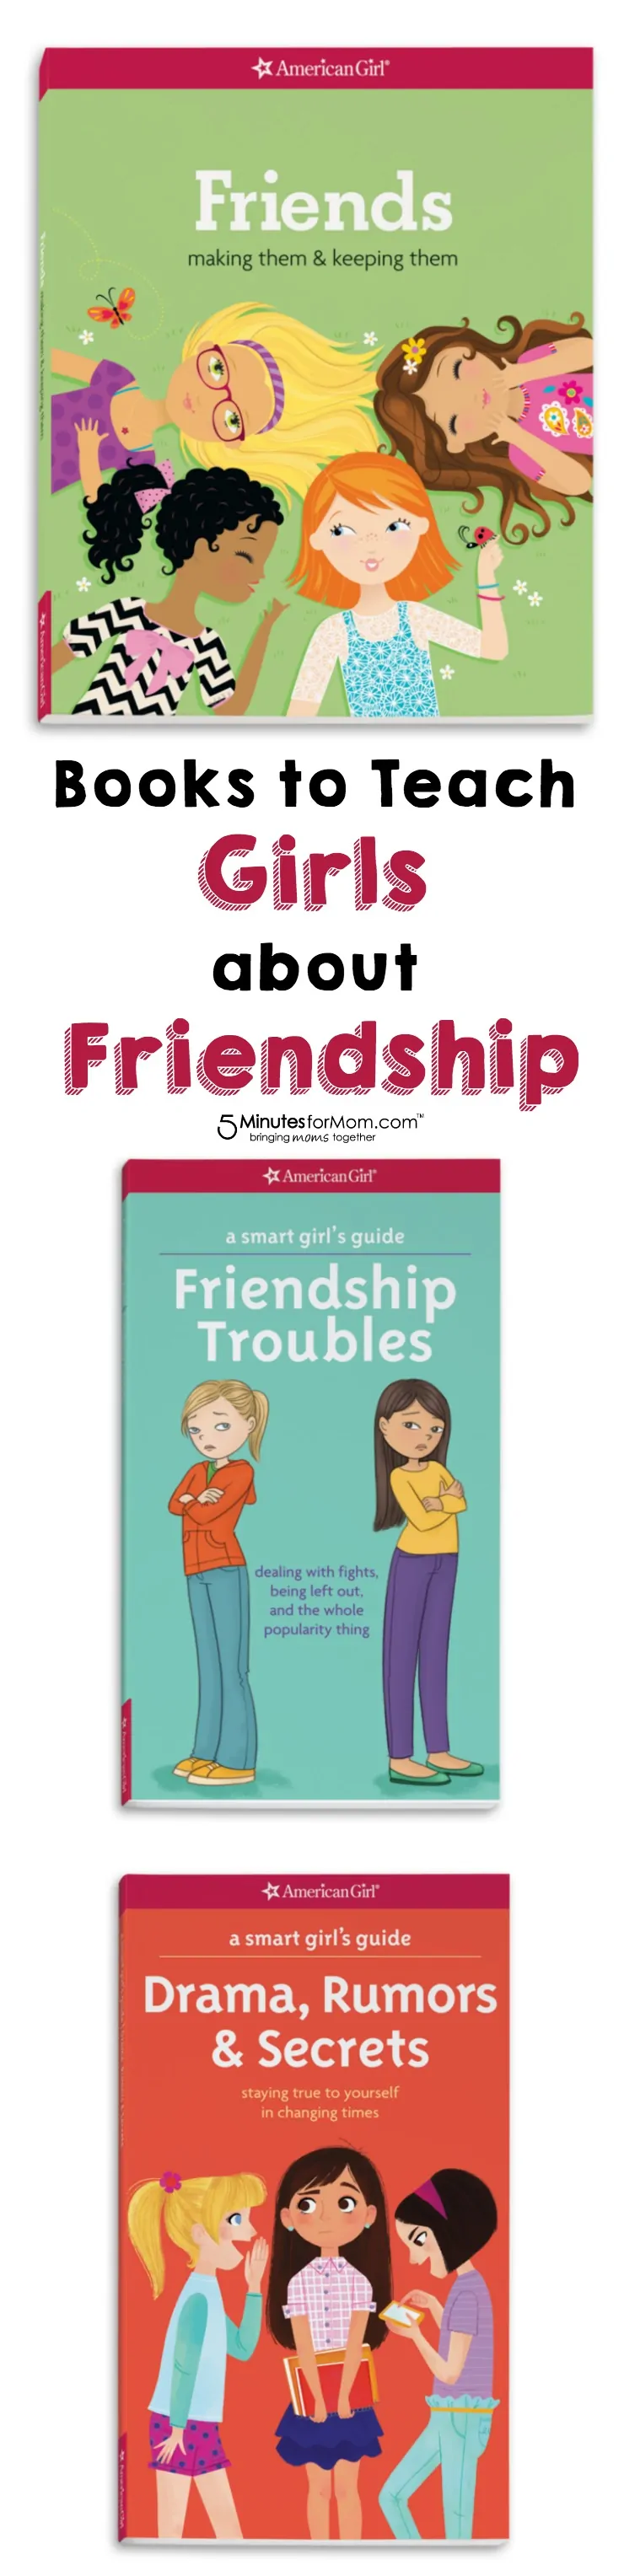 Books to Teach Girls about Friendship